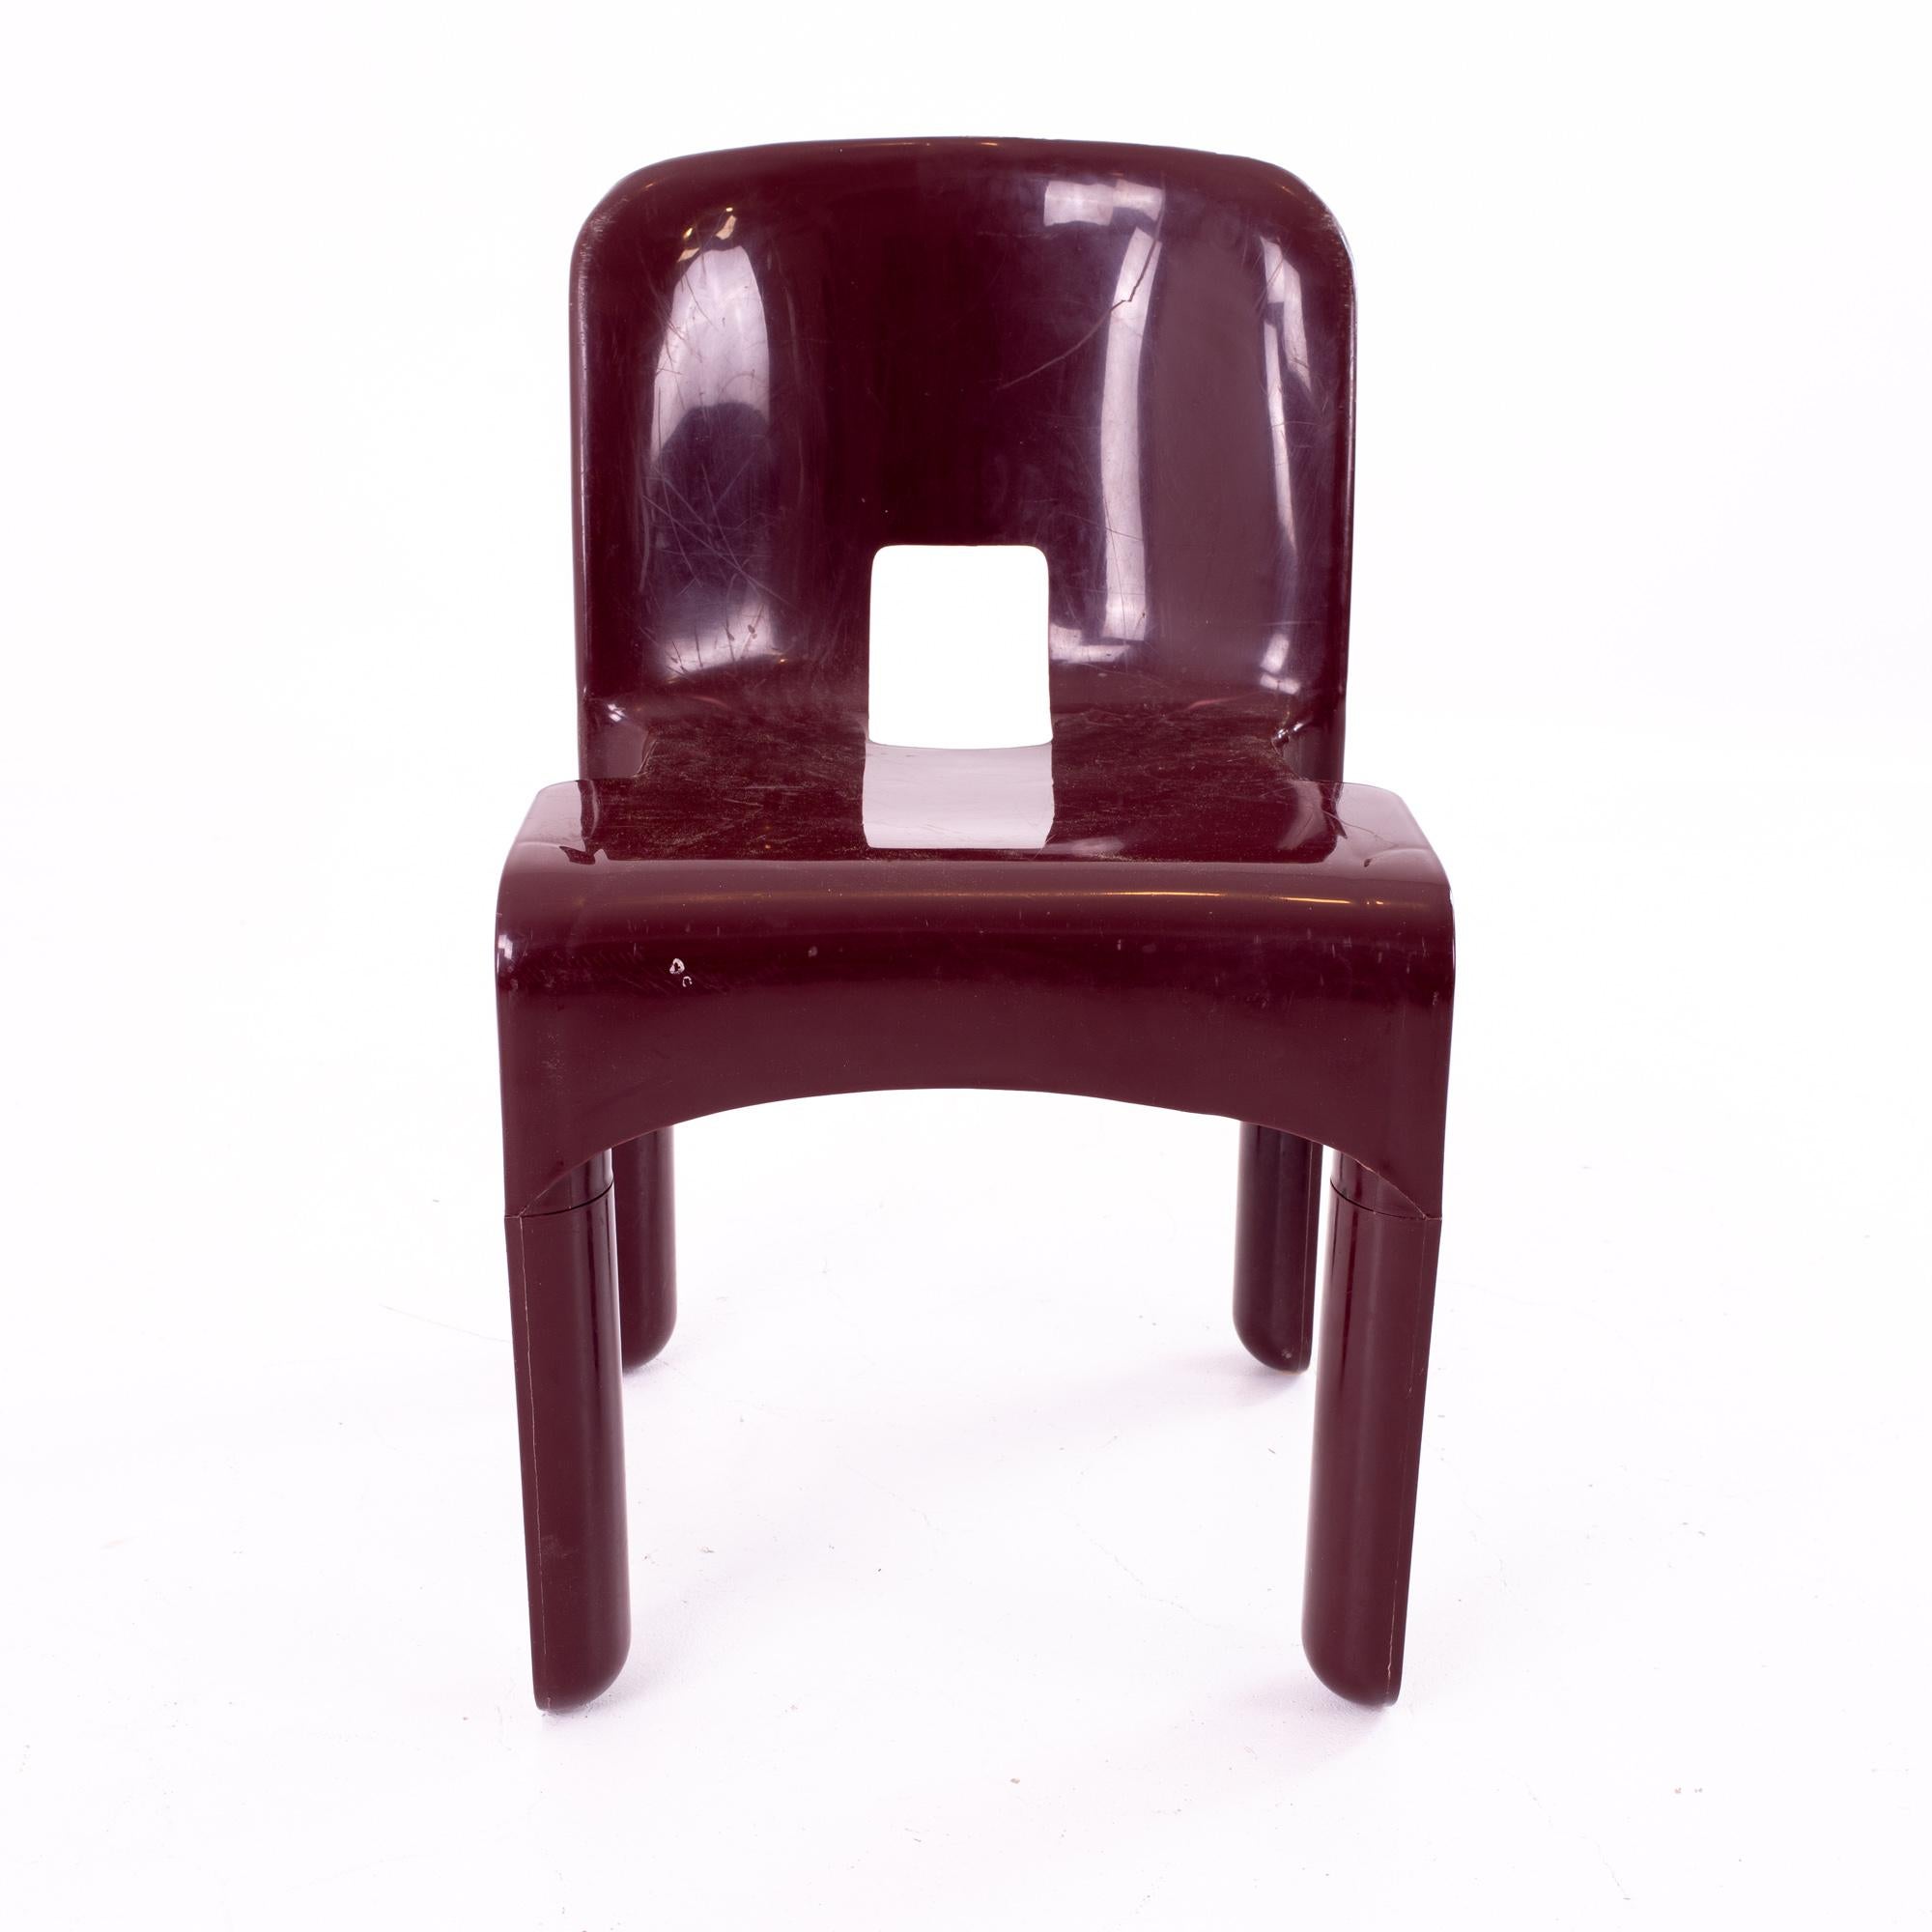 American Joe Colombo Kartell Mid Century Plastic Chairs, Pair